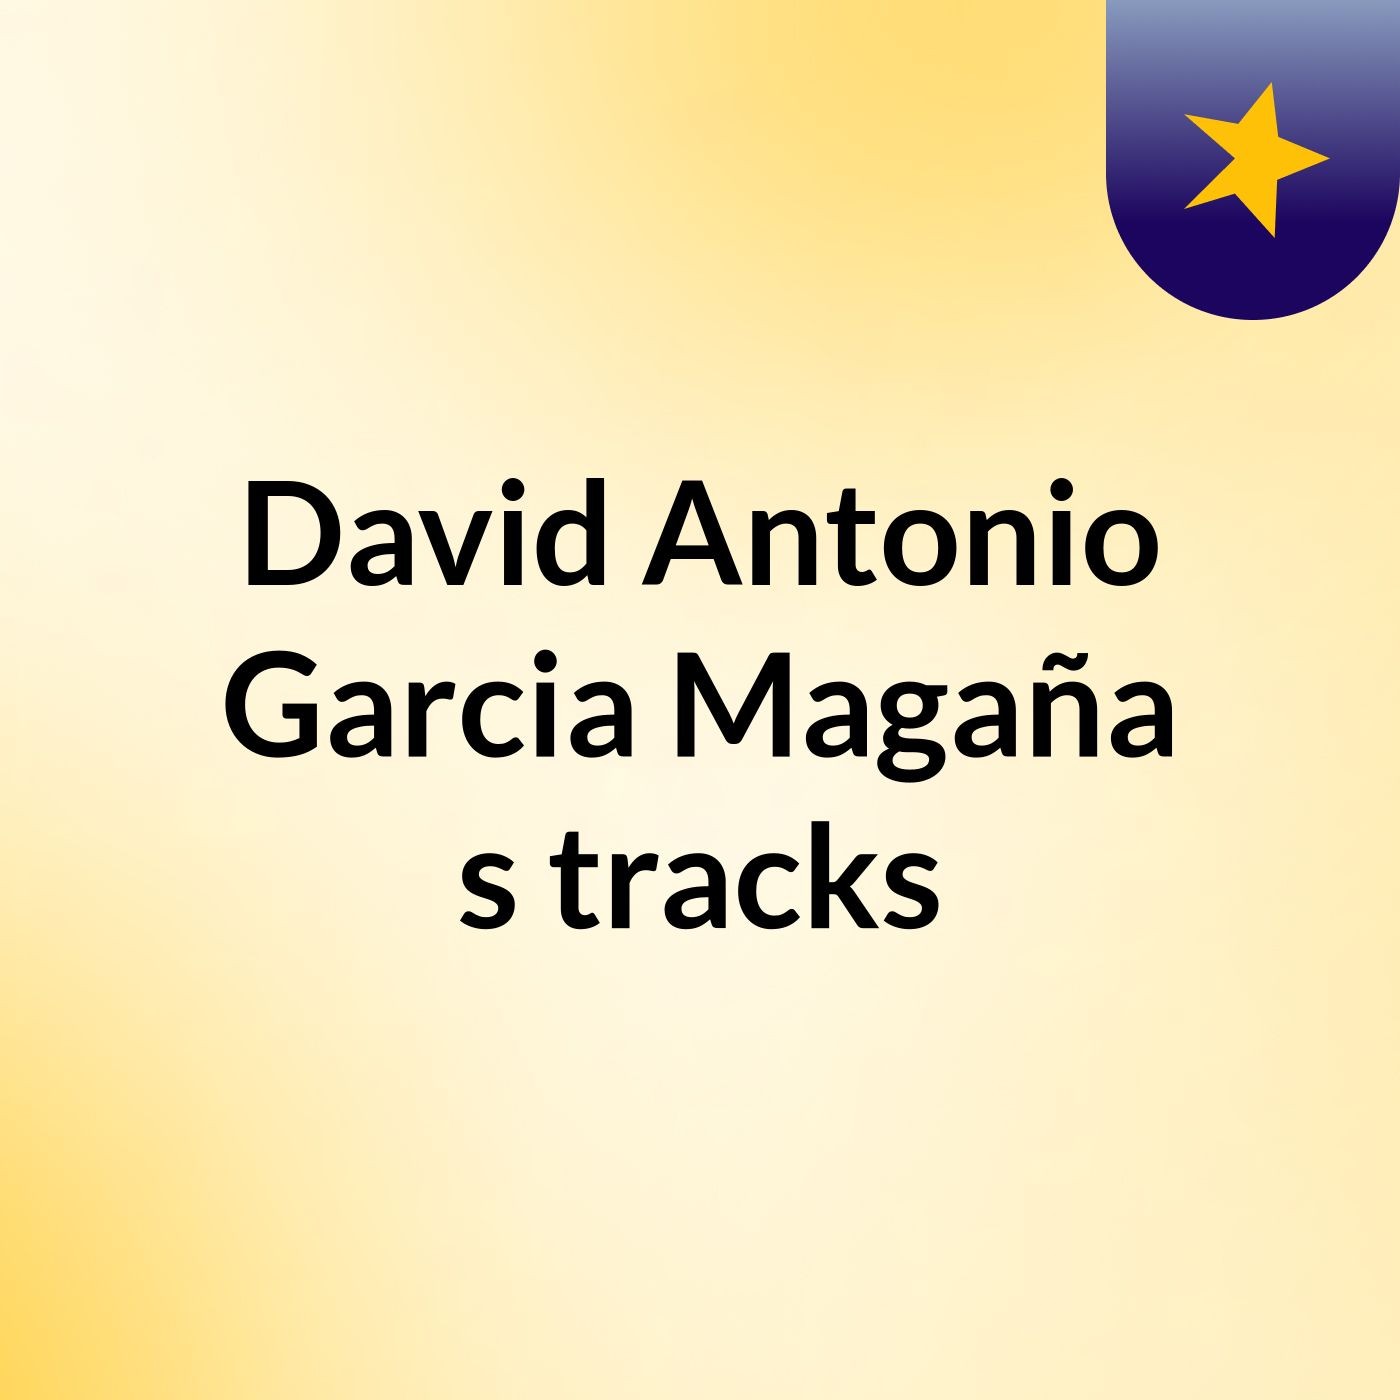 David Antonio Garcia Magaña's tracks